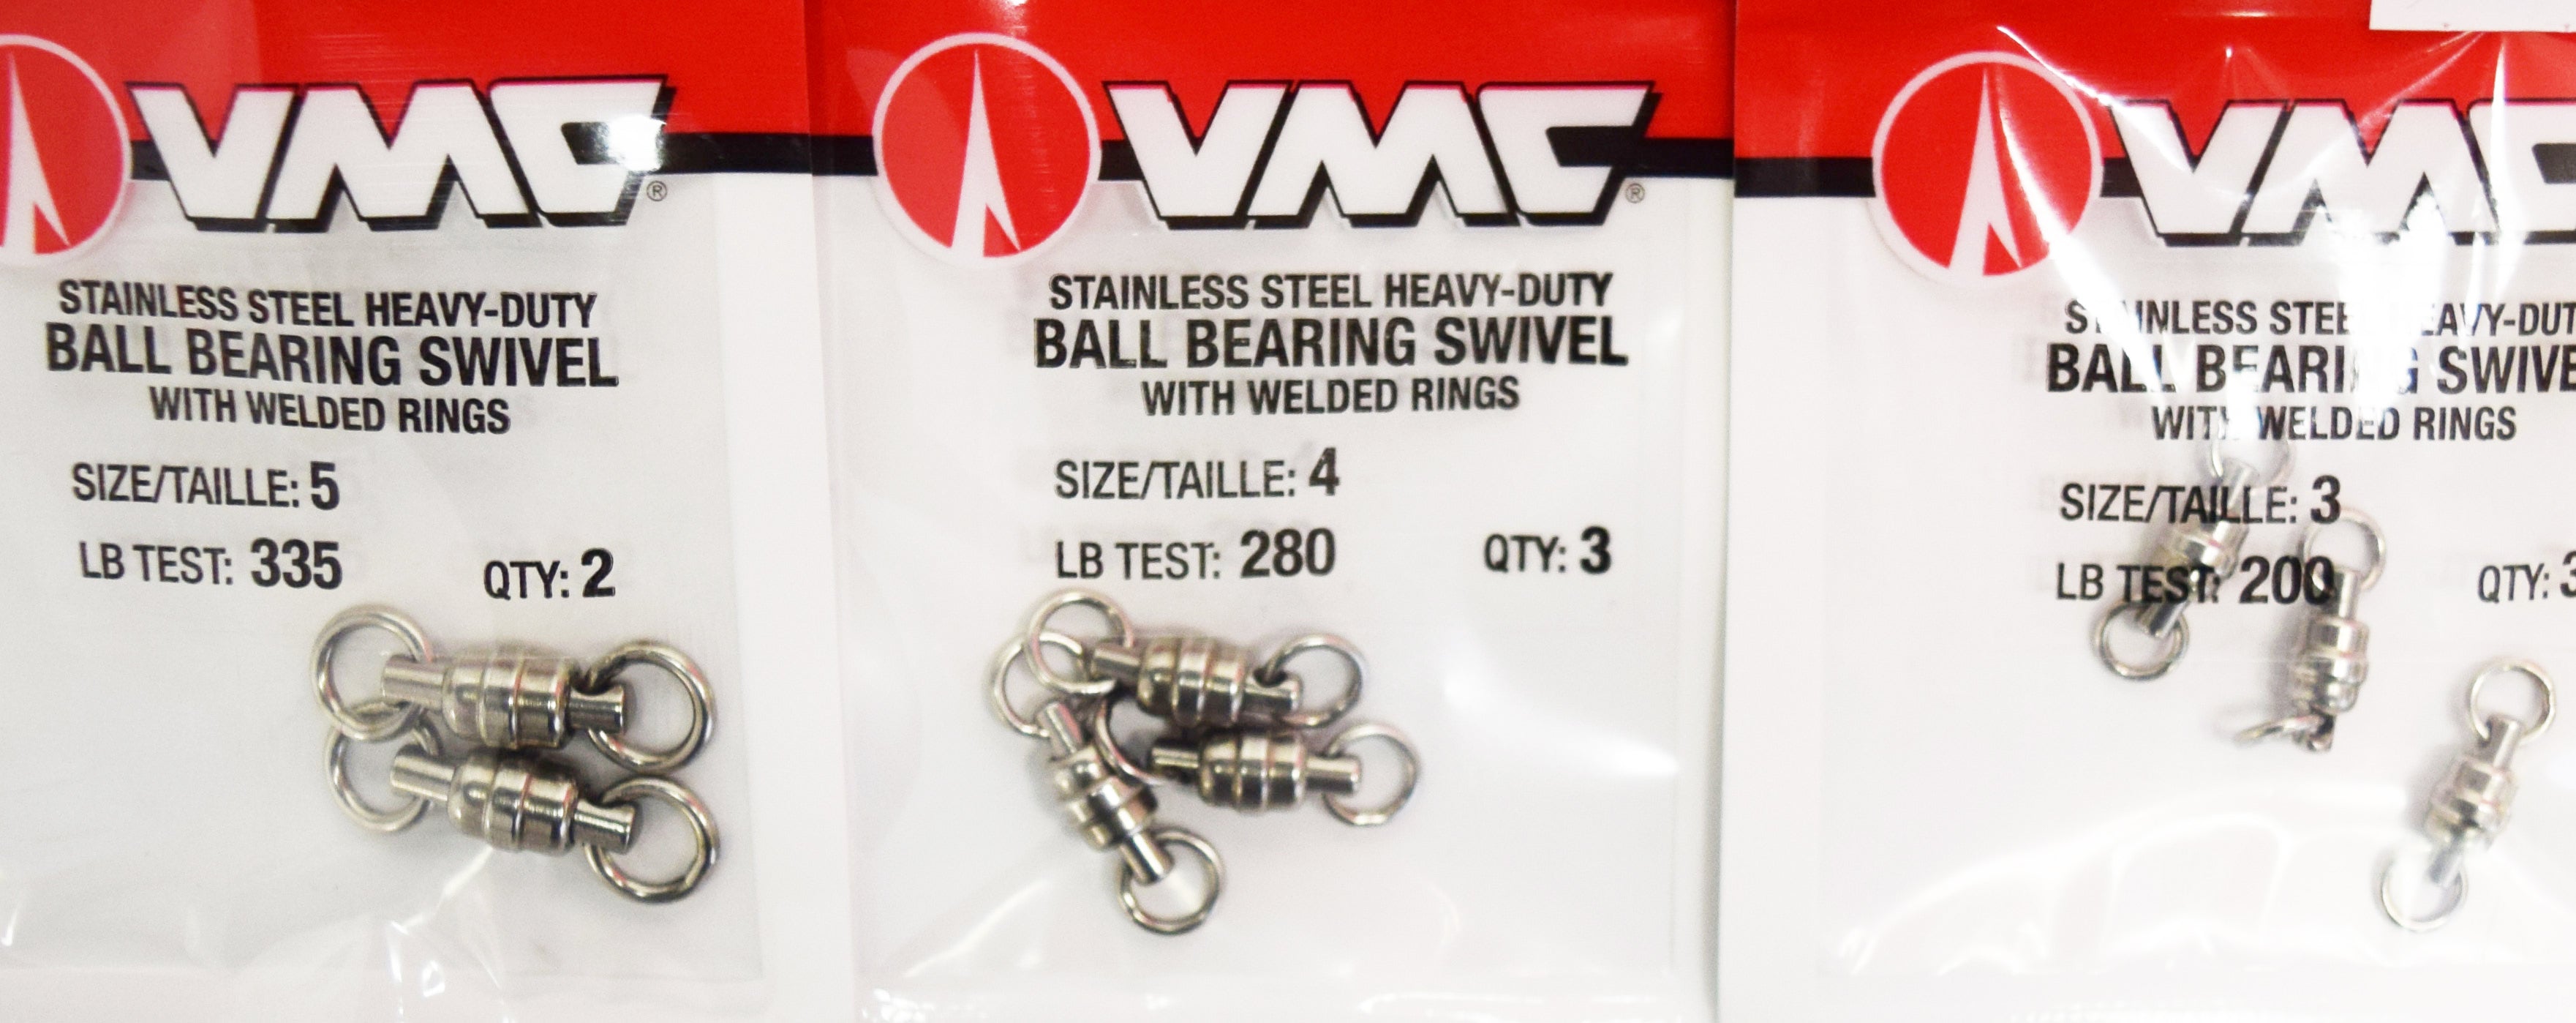 AFW Solid Brass Ball Bearing Swivels w/ Double Welded Rings